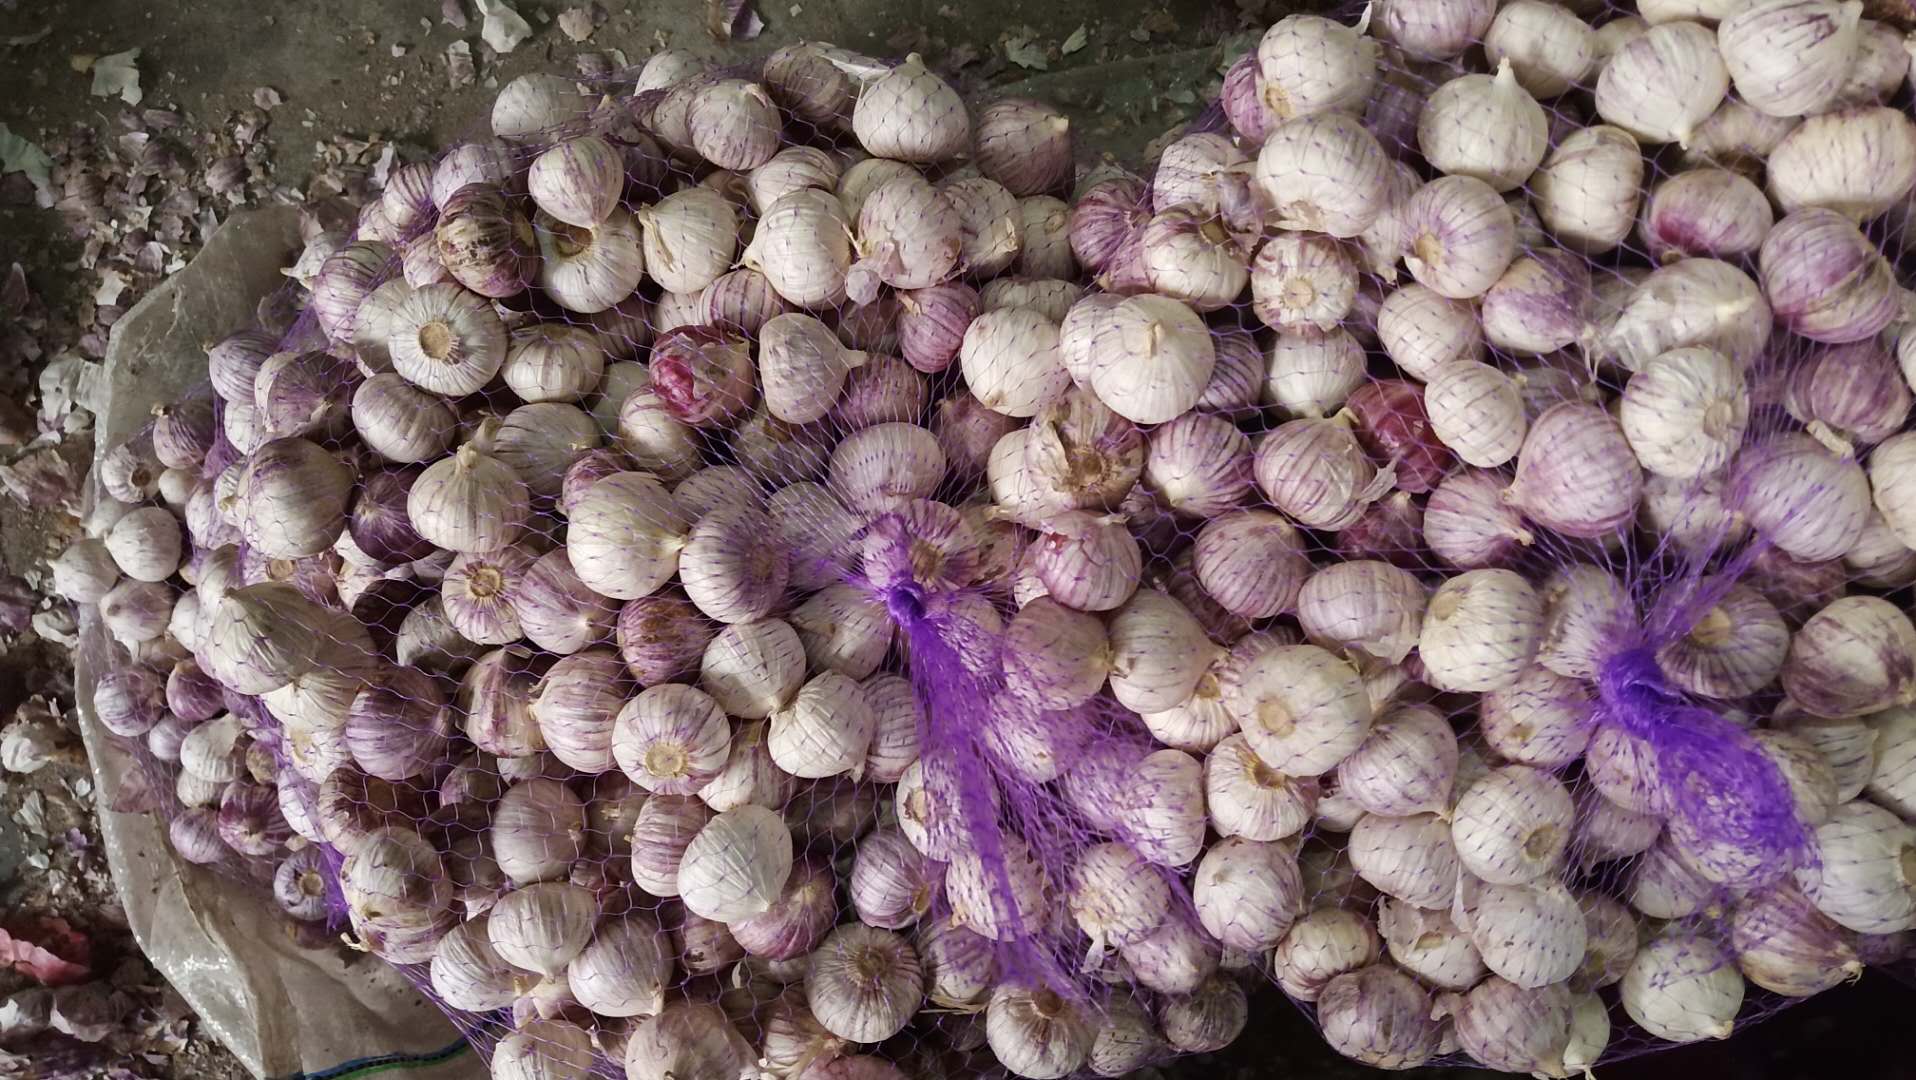 How hard to plant garlic